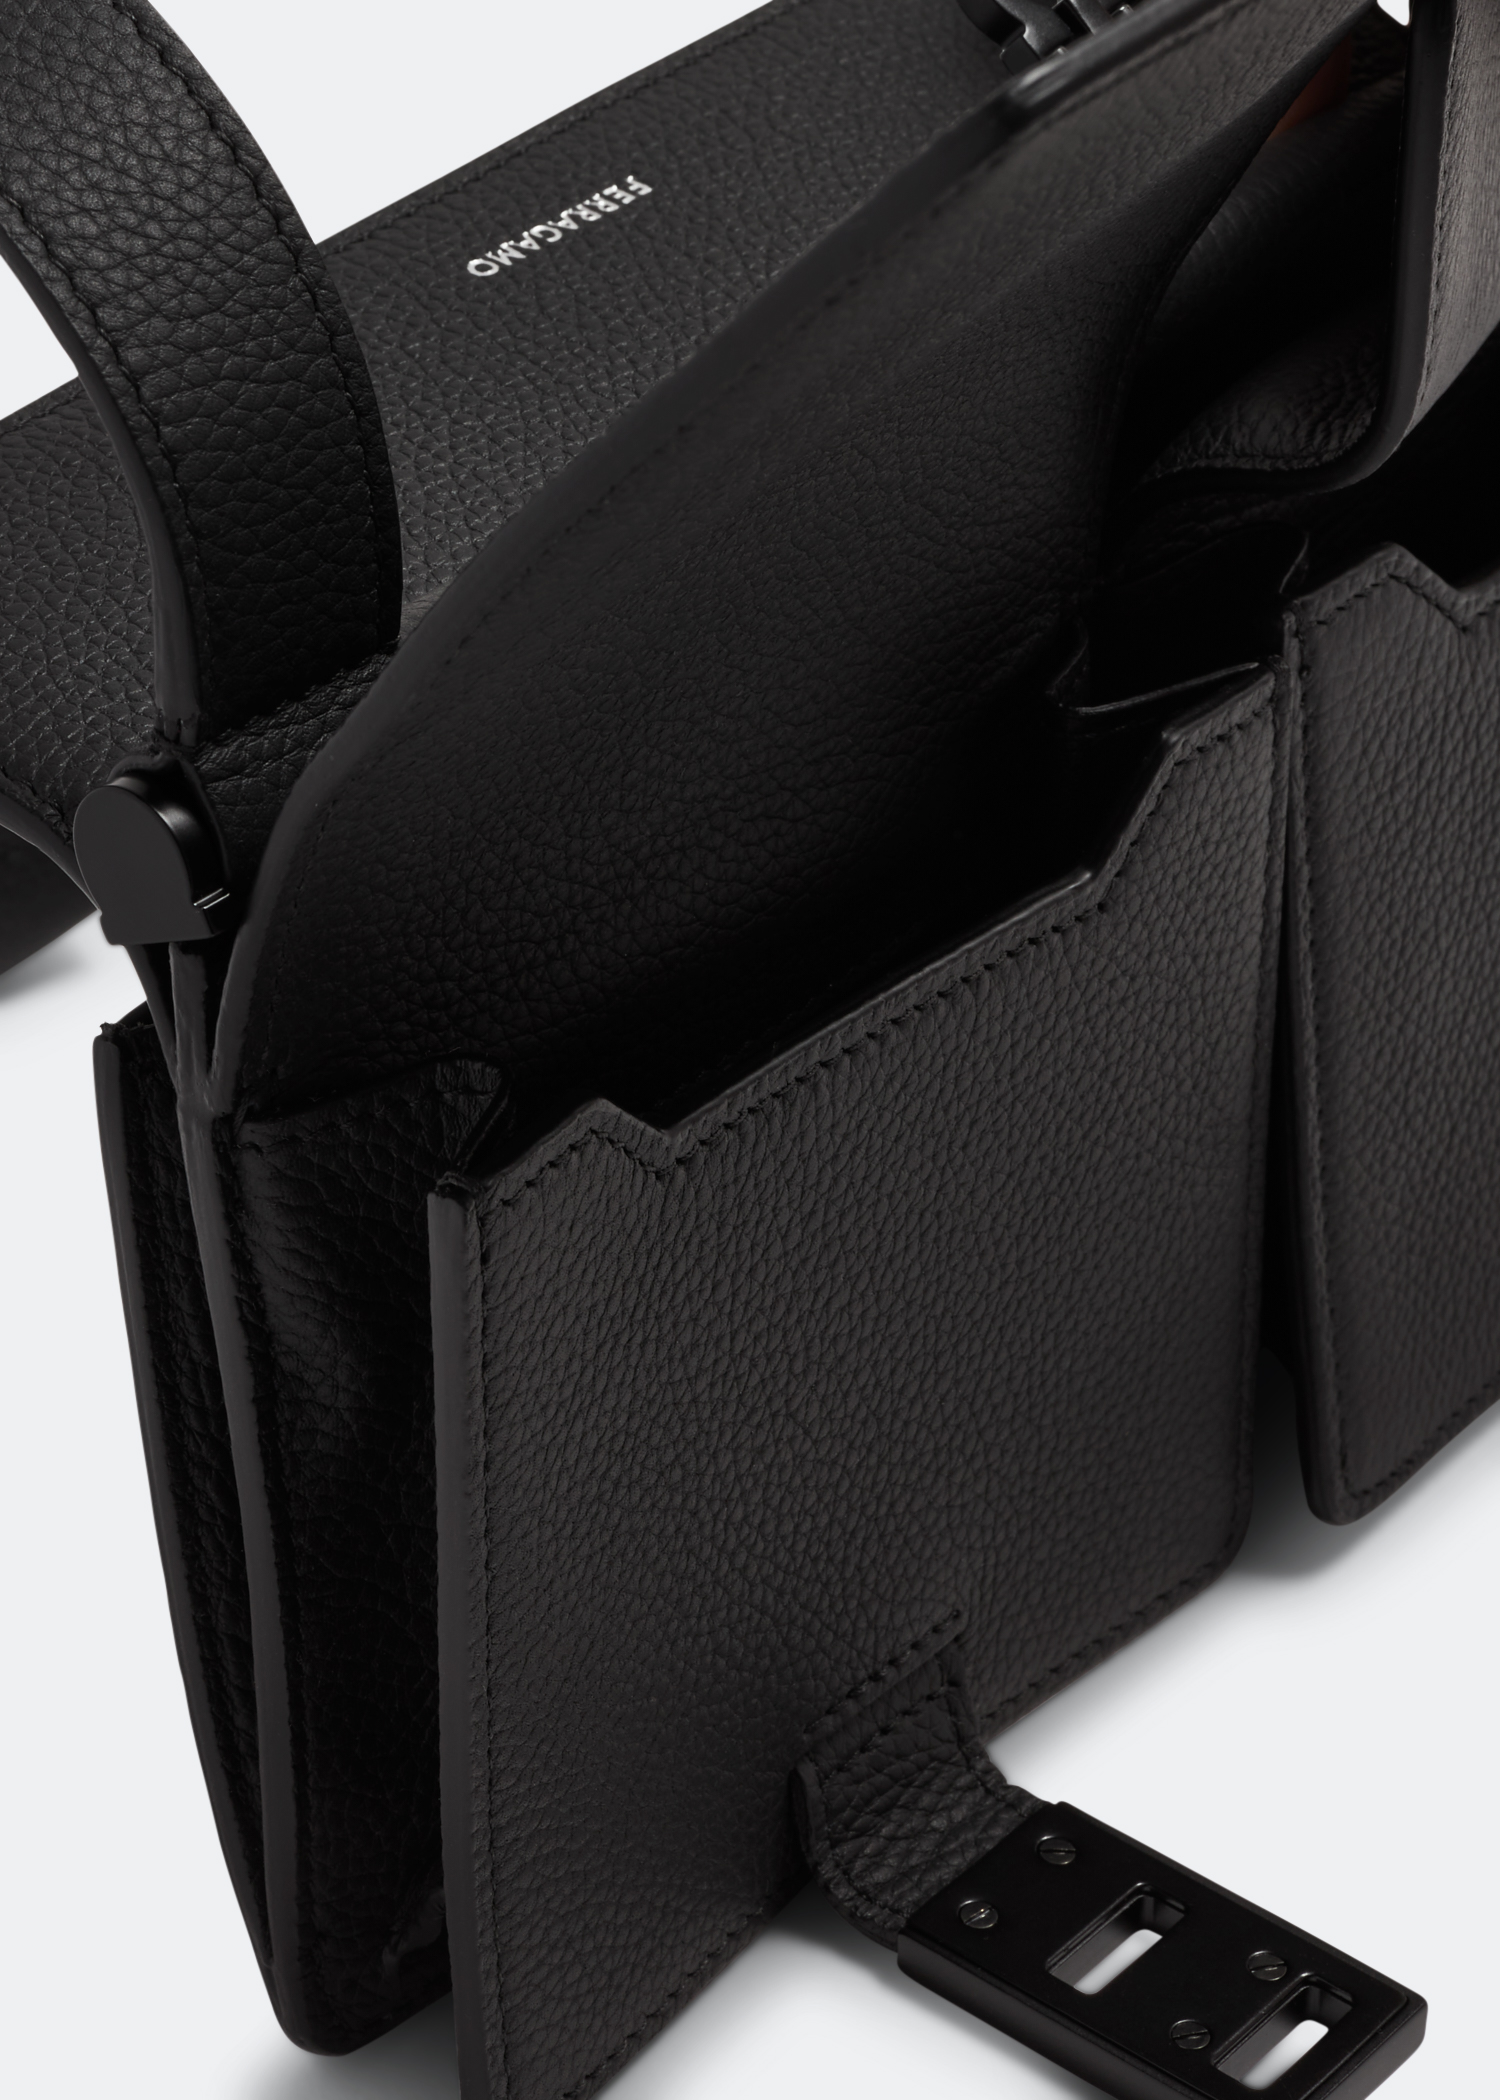 Ferragamo Men's Multi-Pocket Crossbody Bag